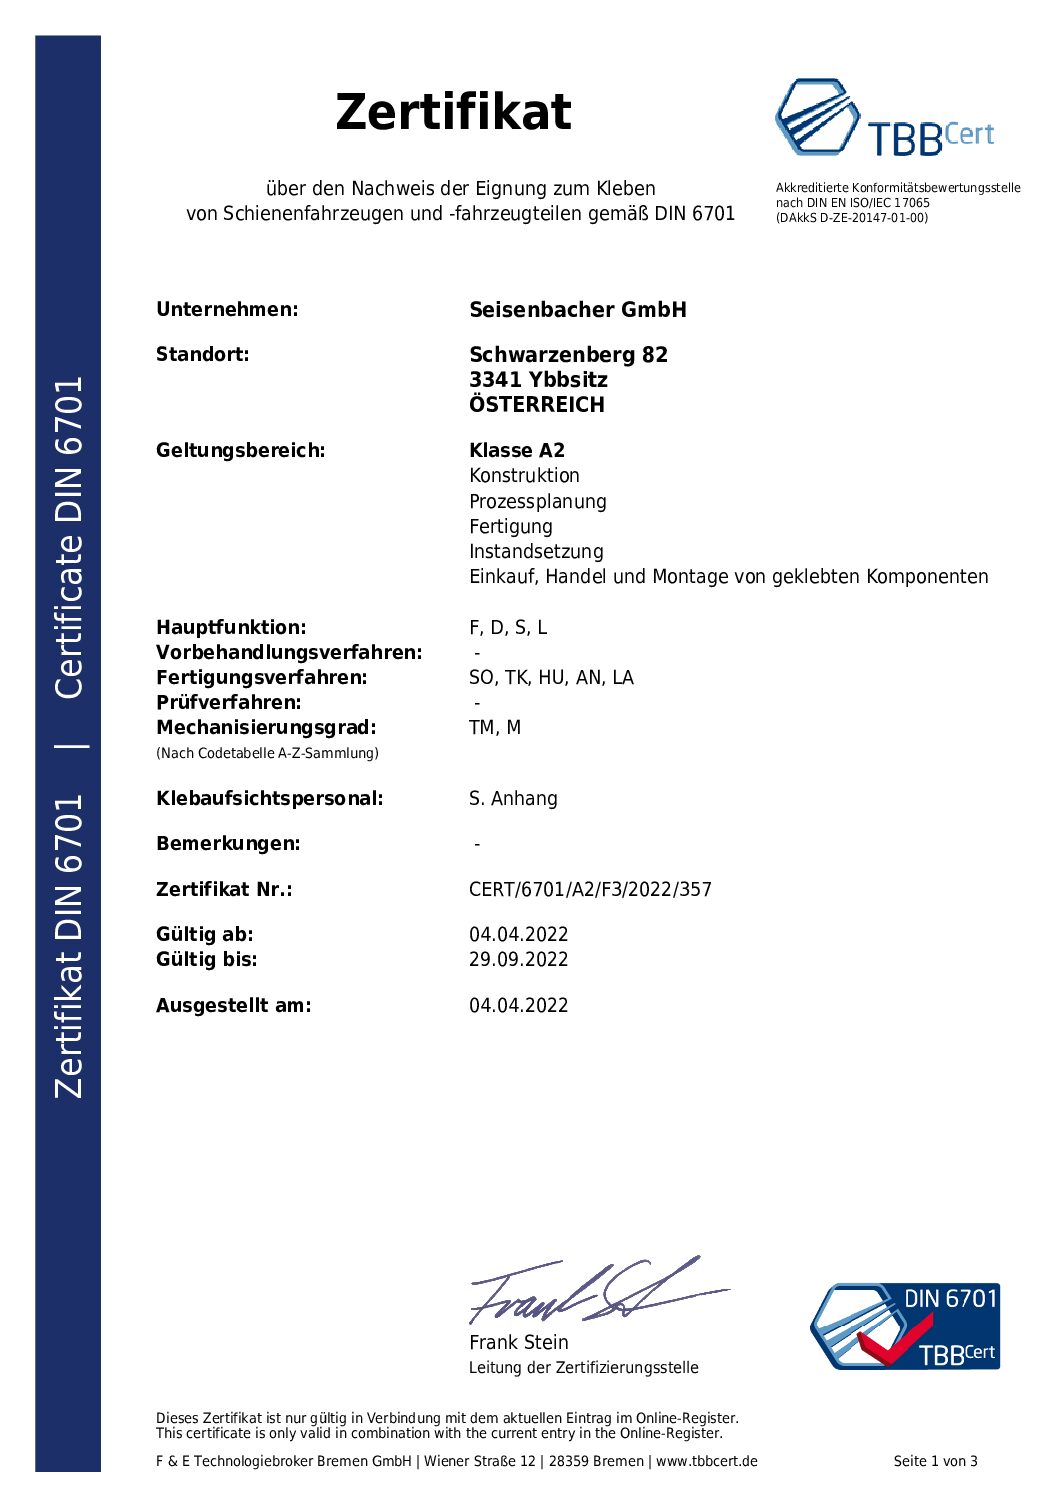 Seisenbacher GmbH: Bonding in Accordance with DIN 6701